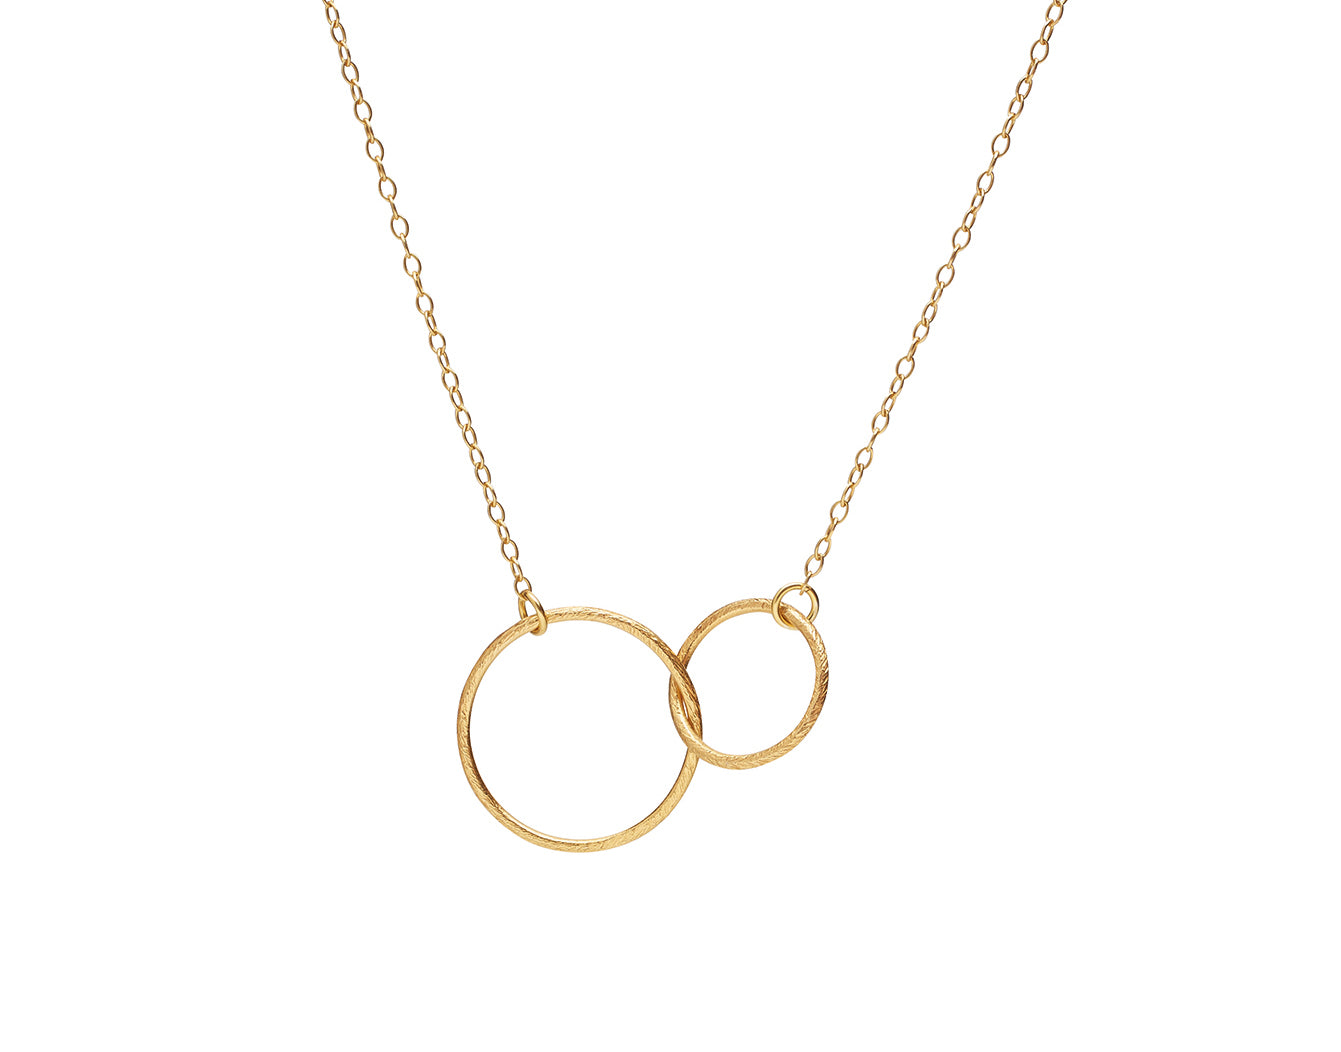 Pernille Corydon Double Plain Necklace Gold Plated